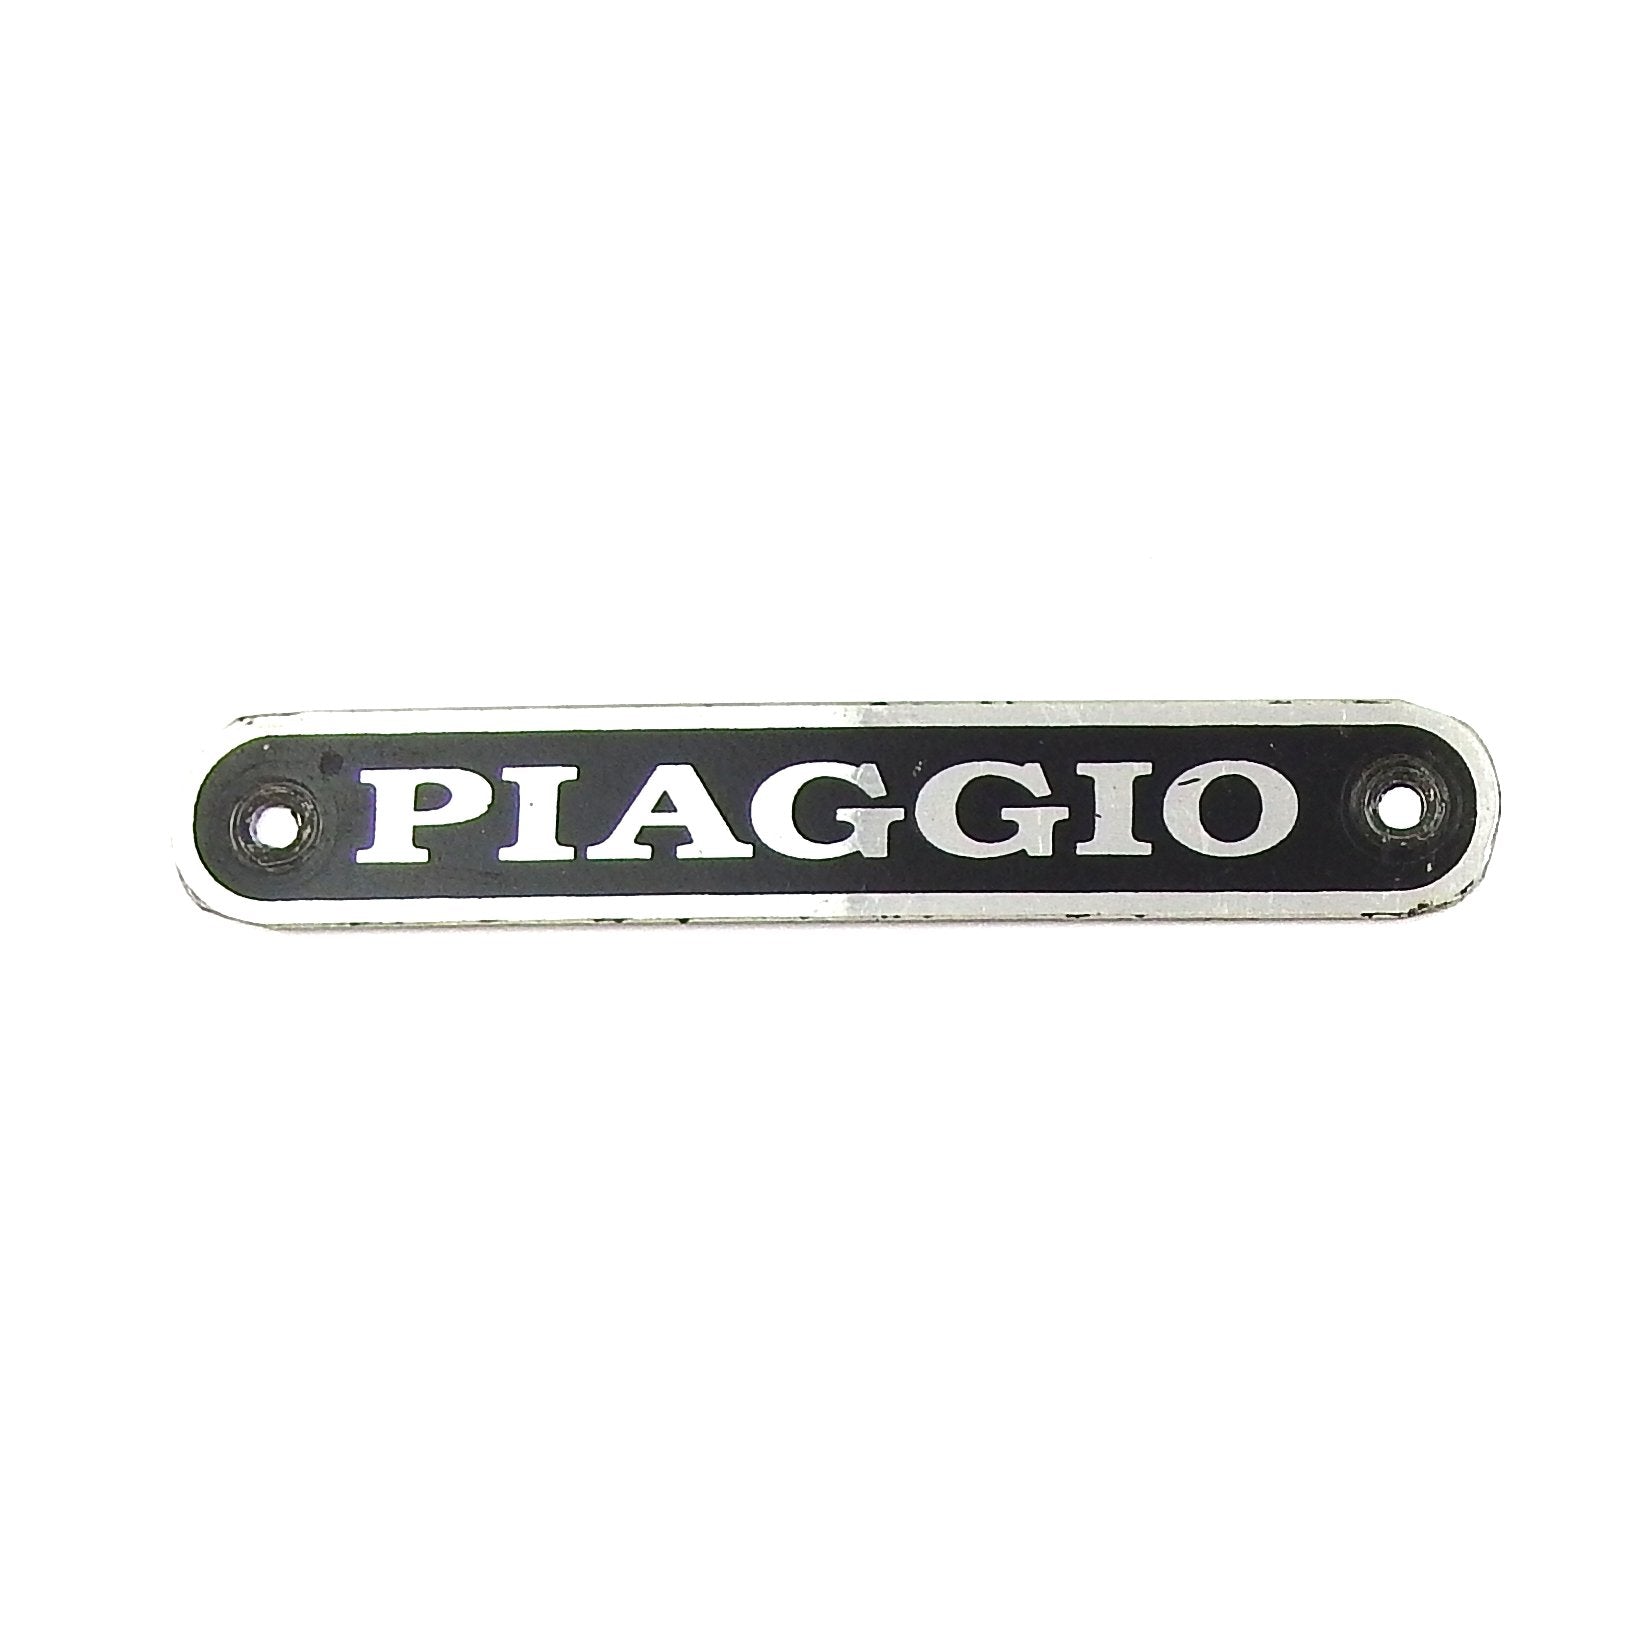 Vespa "Piaggio" Seat Badge Plaque 90mm x 15mm